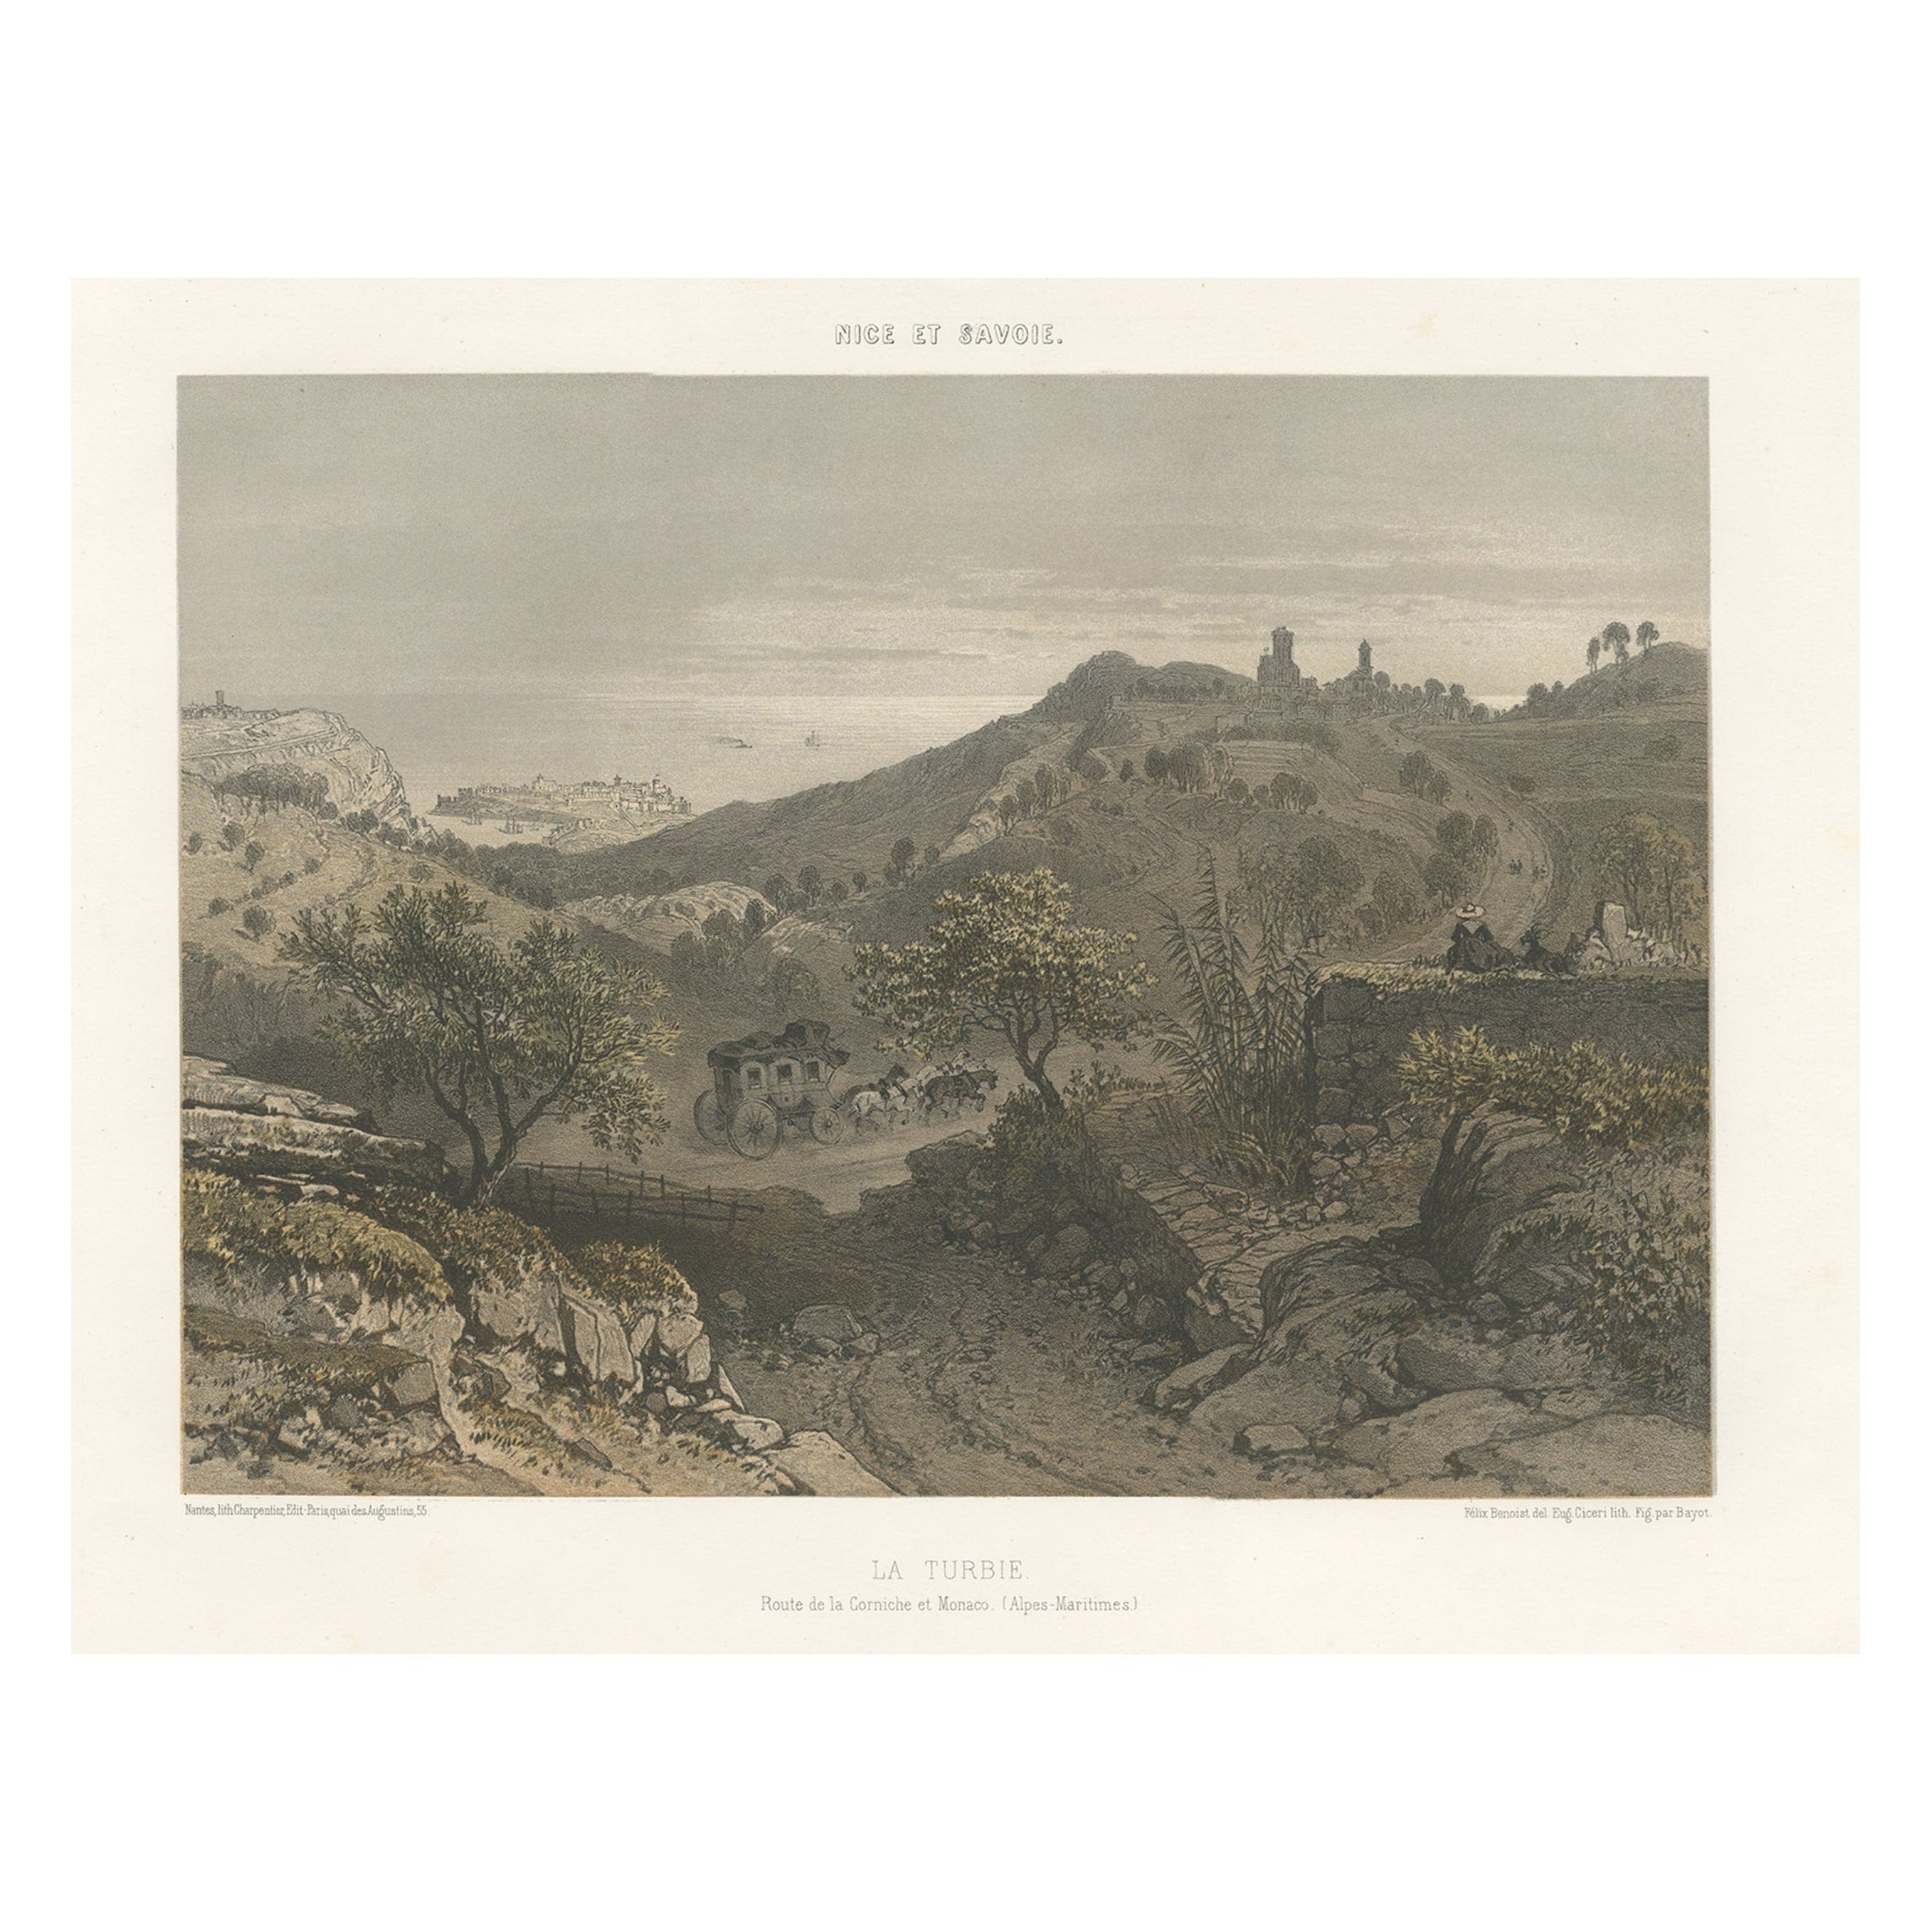 Antique Print of La Turbie or Route de la Corniche et Monaco, c.1865